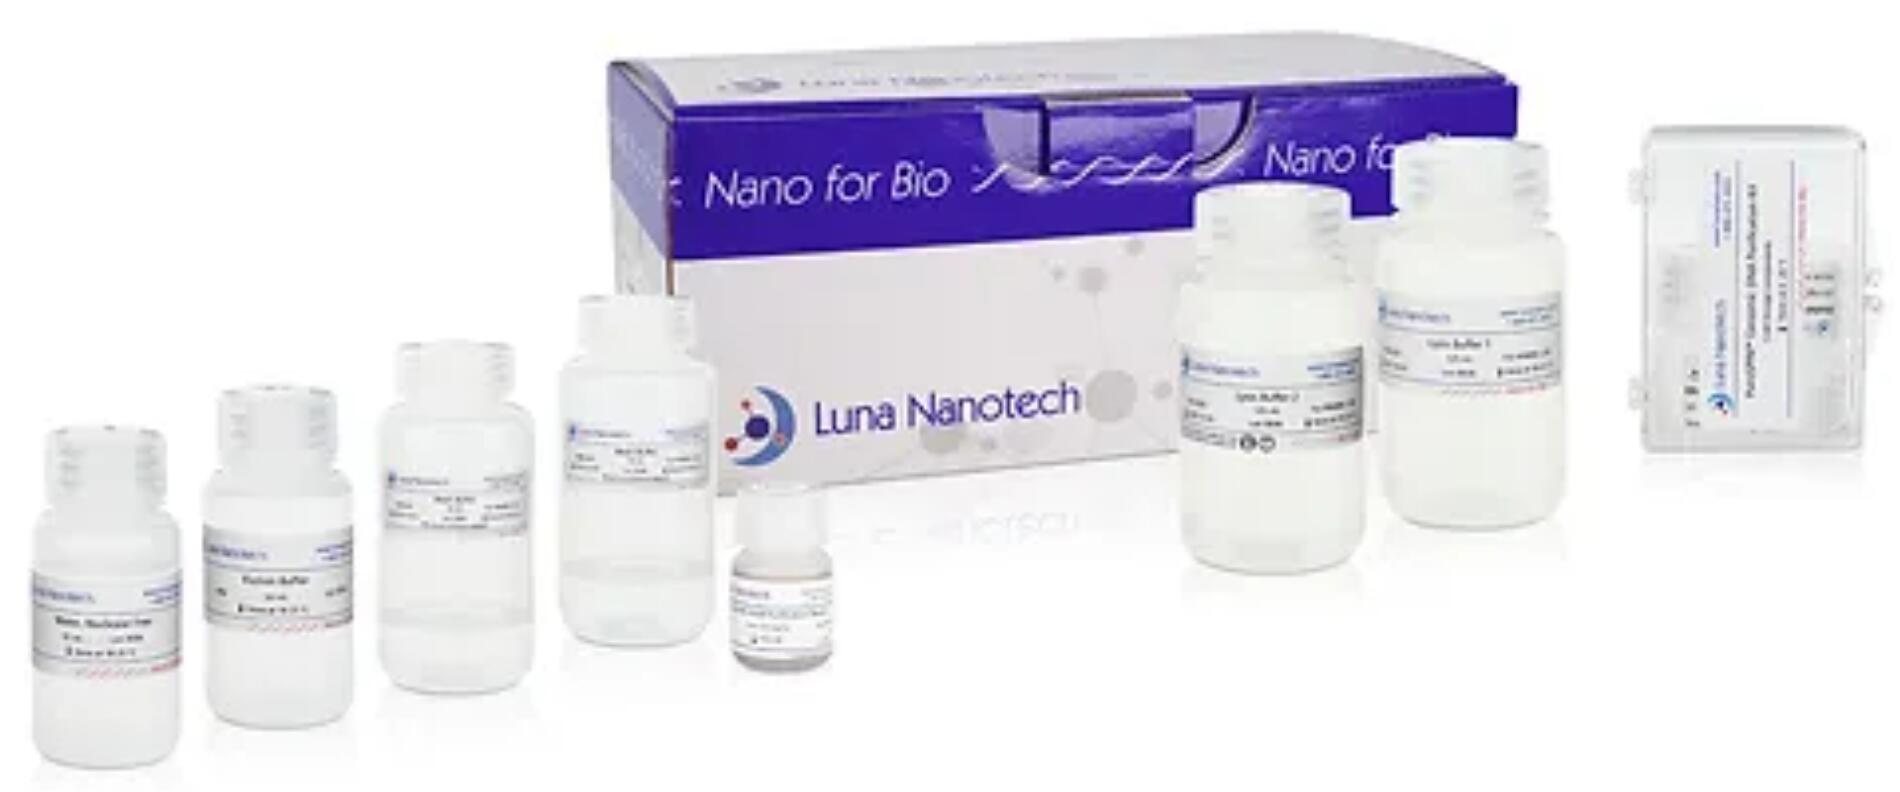 Luna Nanotech热销产品线——核酸提取纯化试剂